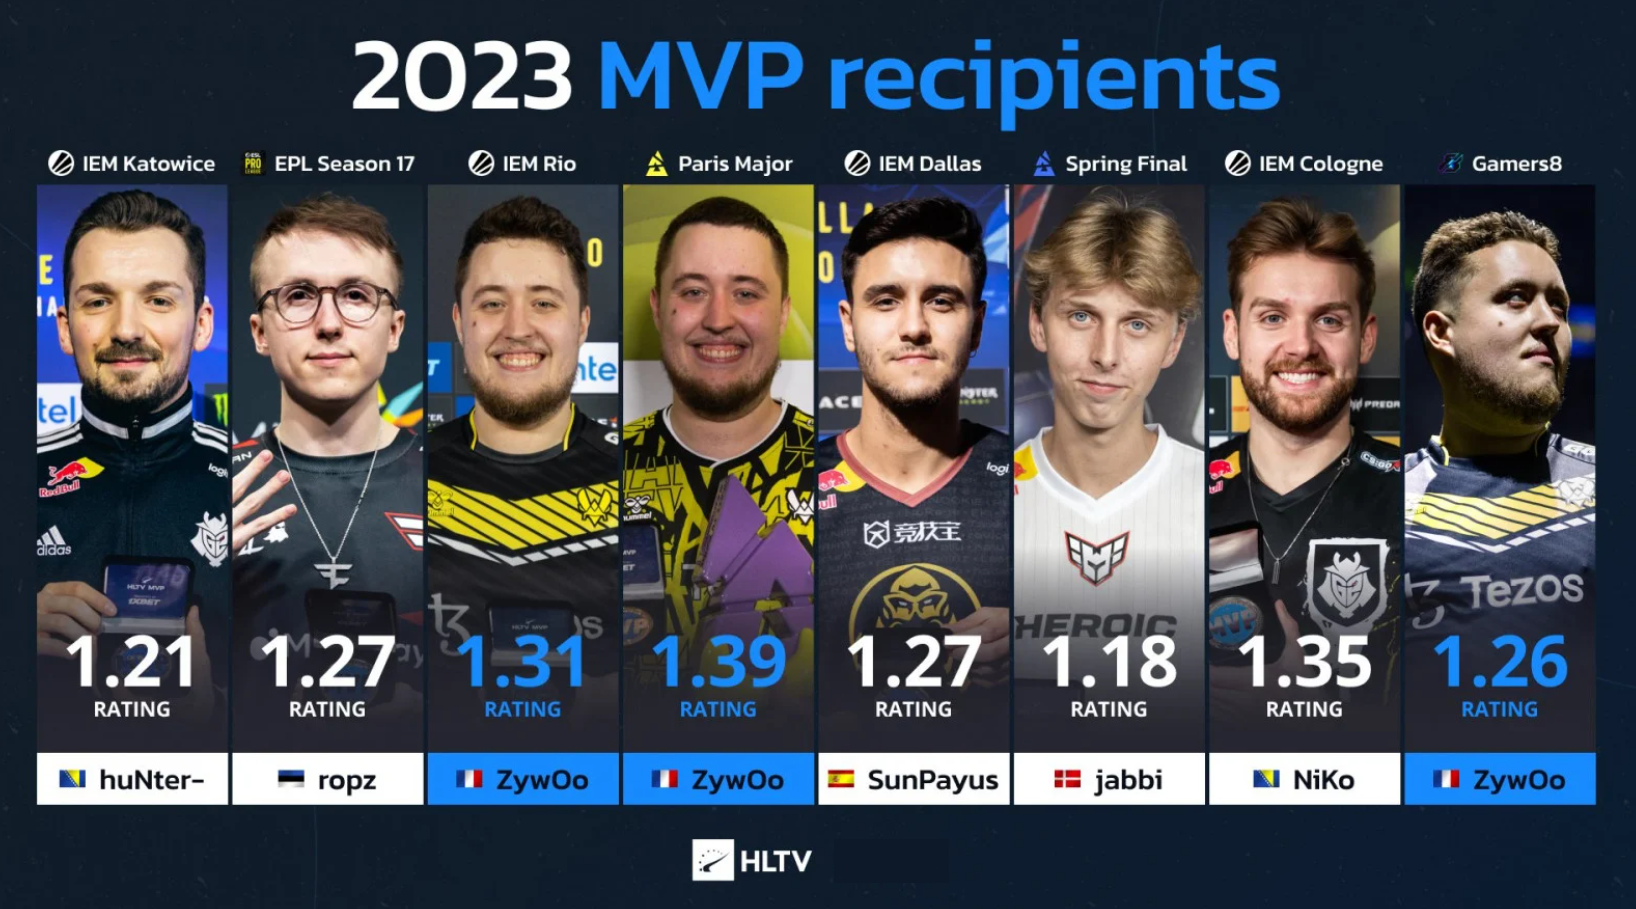 Обладатели медалей MVP на турнирах по CS:GO в 2023 году